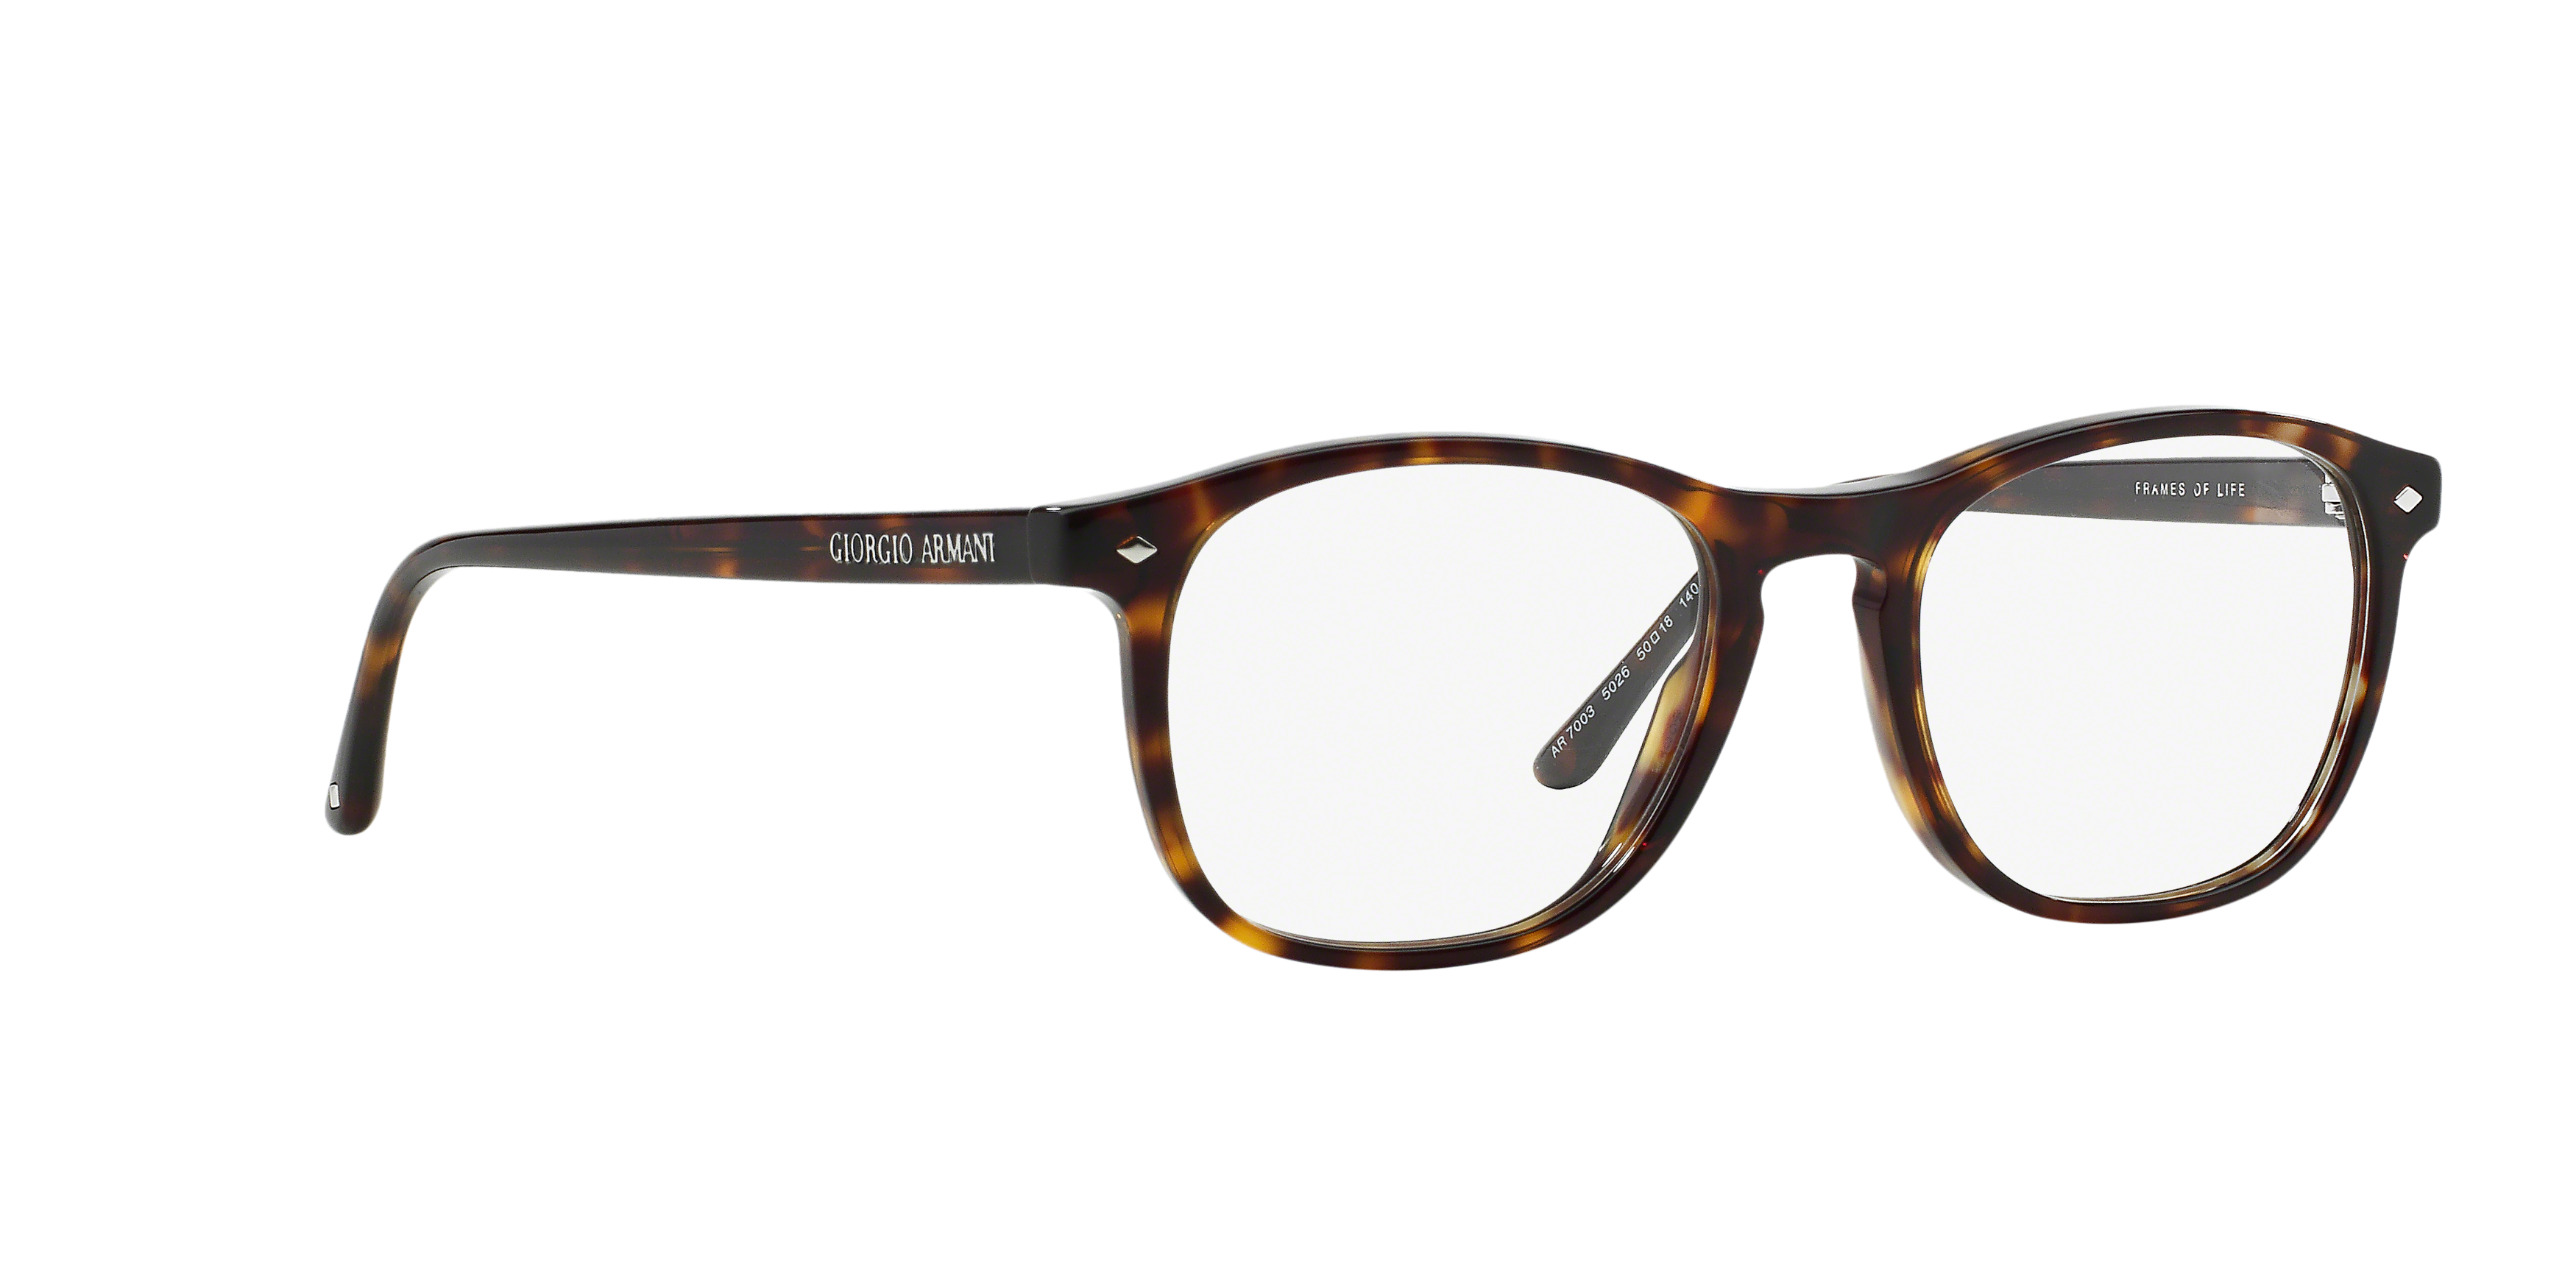 Angle_Right01 Giorgio Armani AR 7003 Glasses Transparent / Tortoise Shell